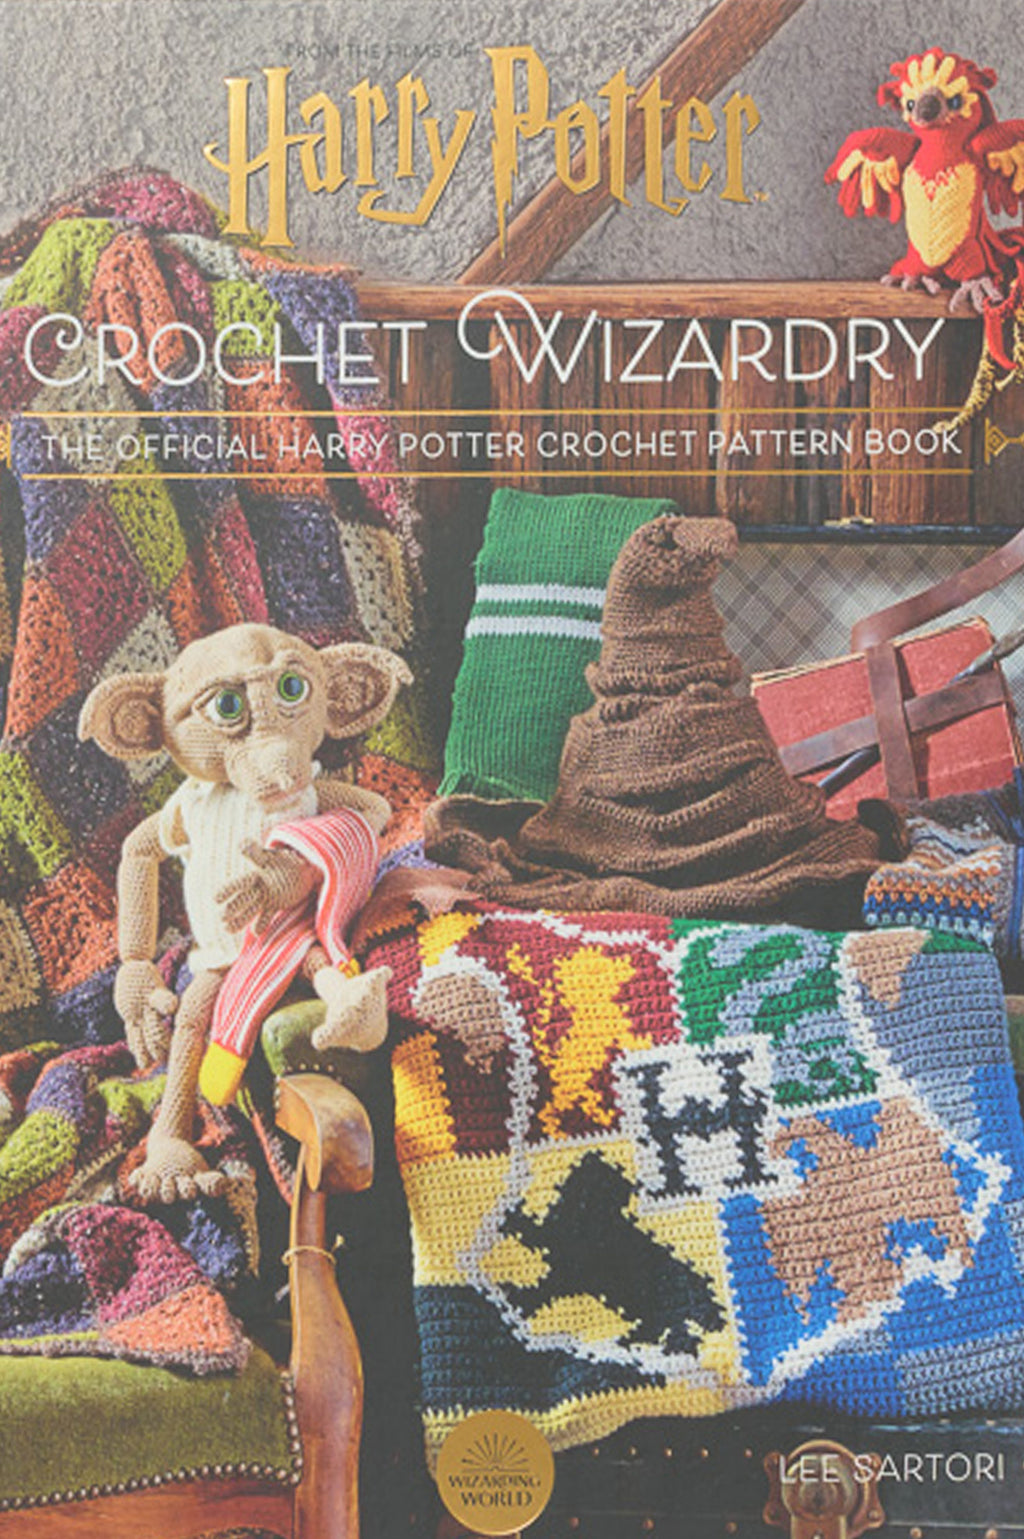  Harry Potter: Crochet Wizardry, Crochet Patterns